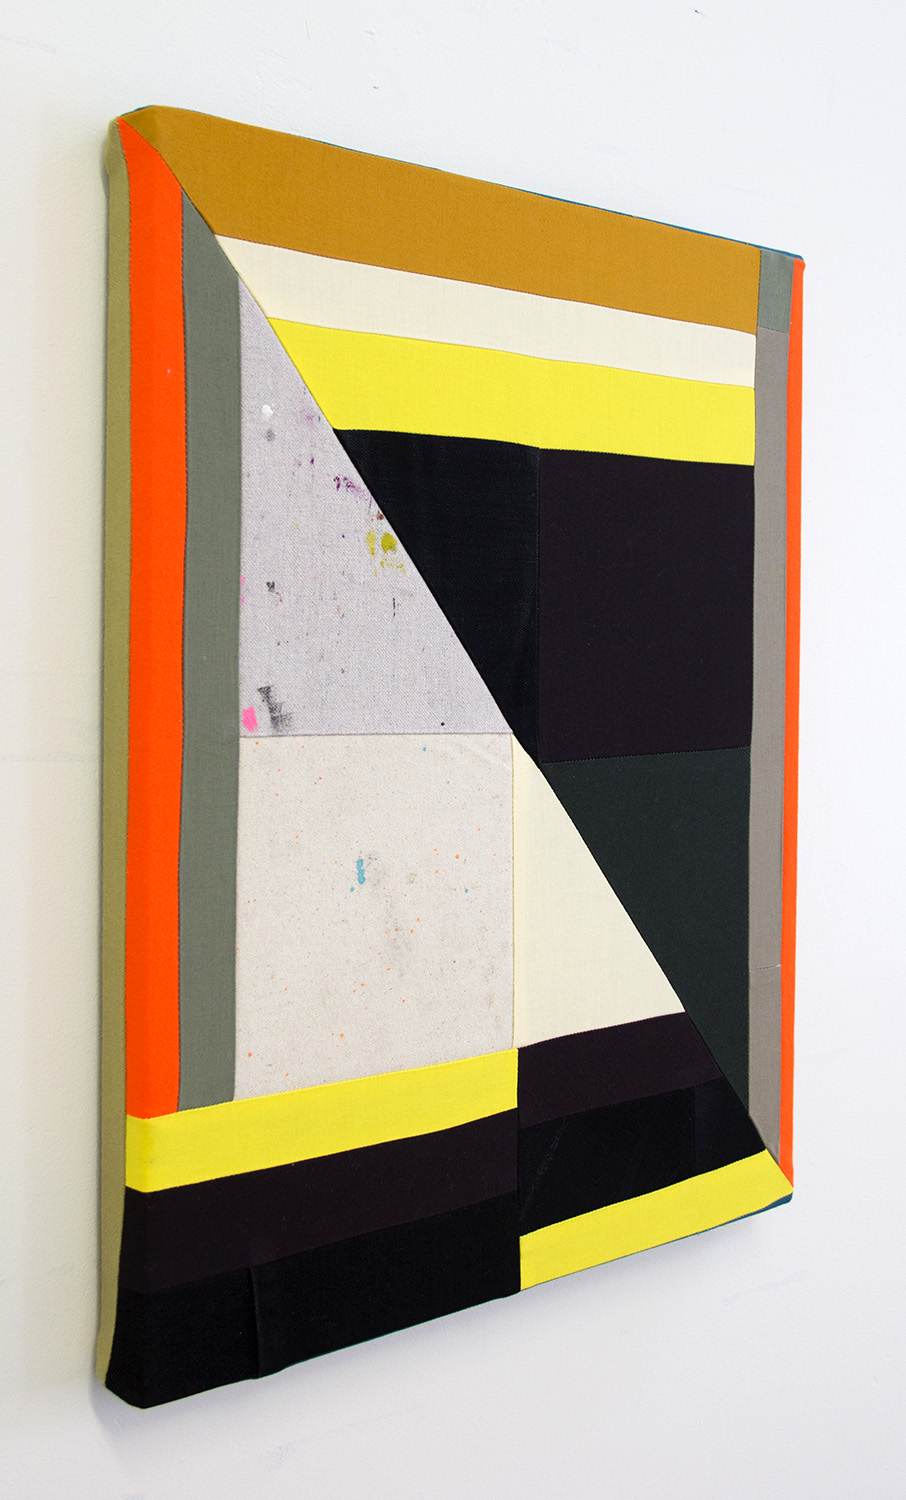    of Color, No. 9 (side view)   ,  2019 Sewn canvas, cotton, Levi’s denim, acrylic 20 x 16 inches (50.8 x 40.6 cm) 